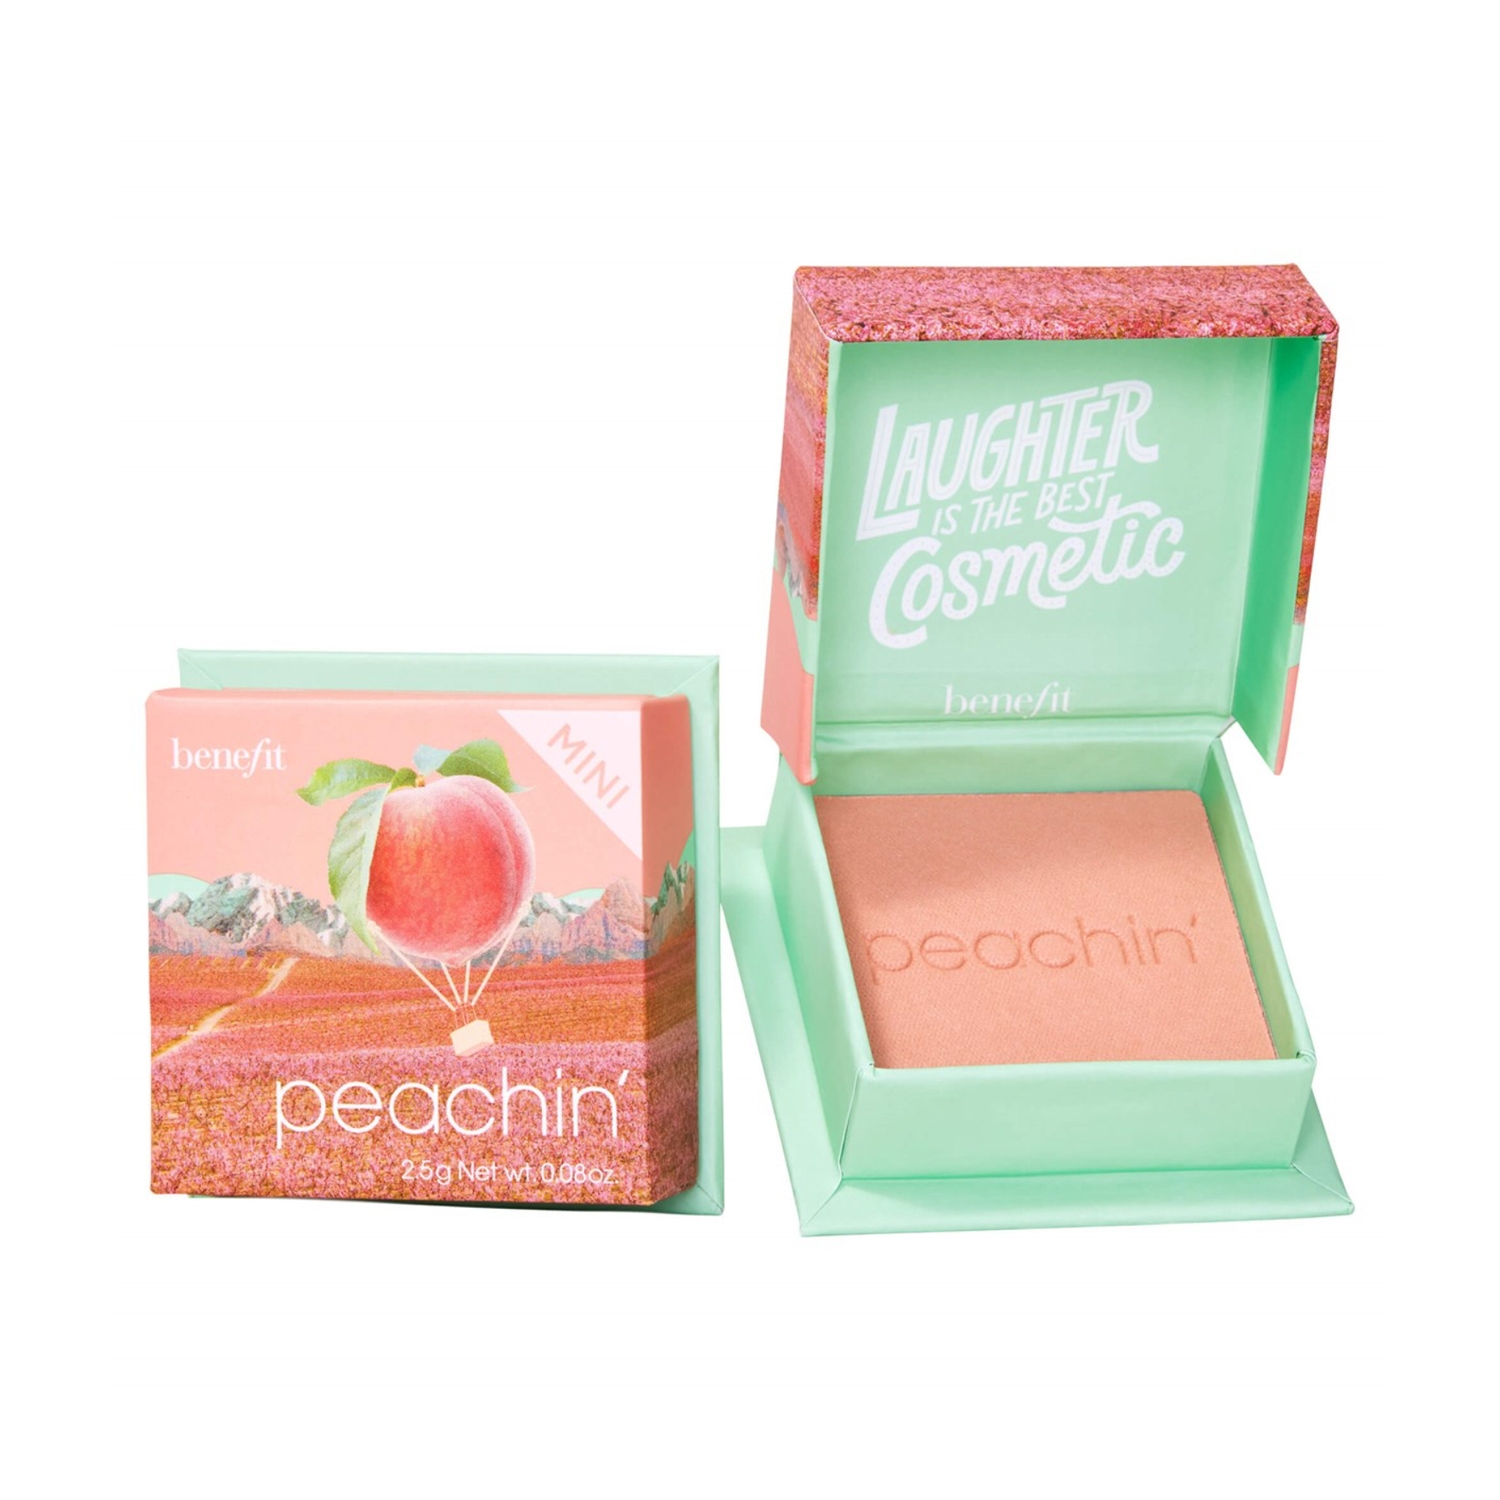 Benefit Cosmetics | Benefit Cosmetics Peachin' Blush Mini - Golden Peach (2.5g)